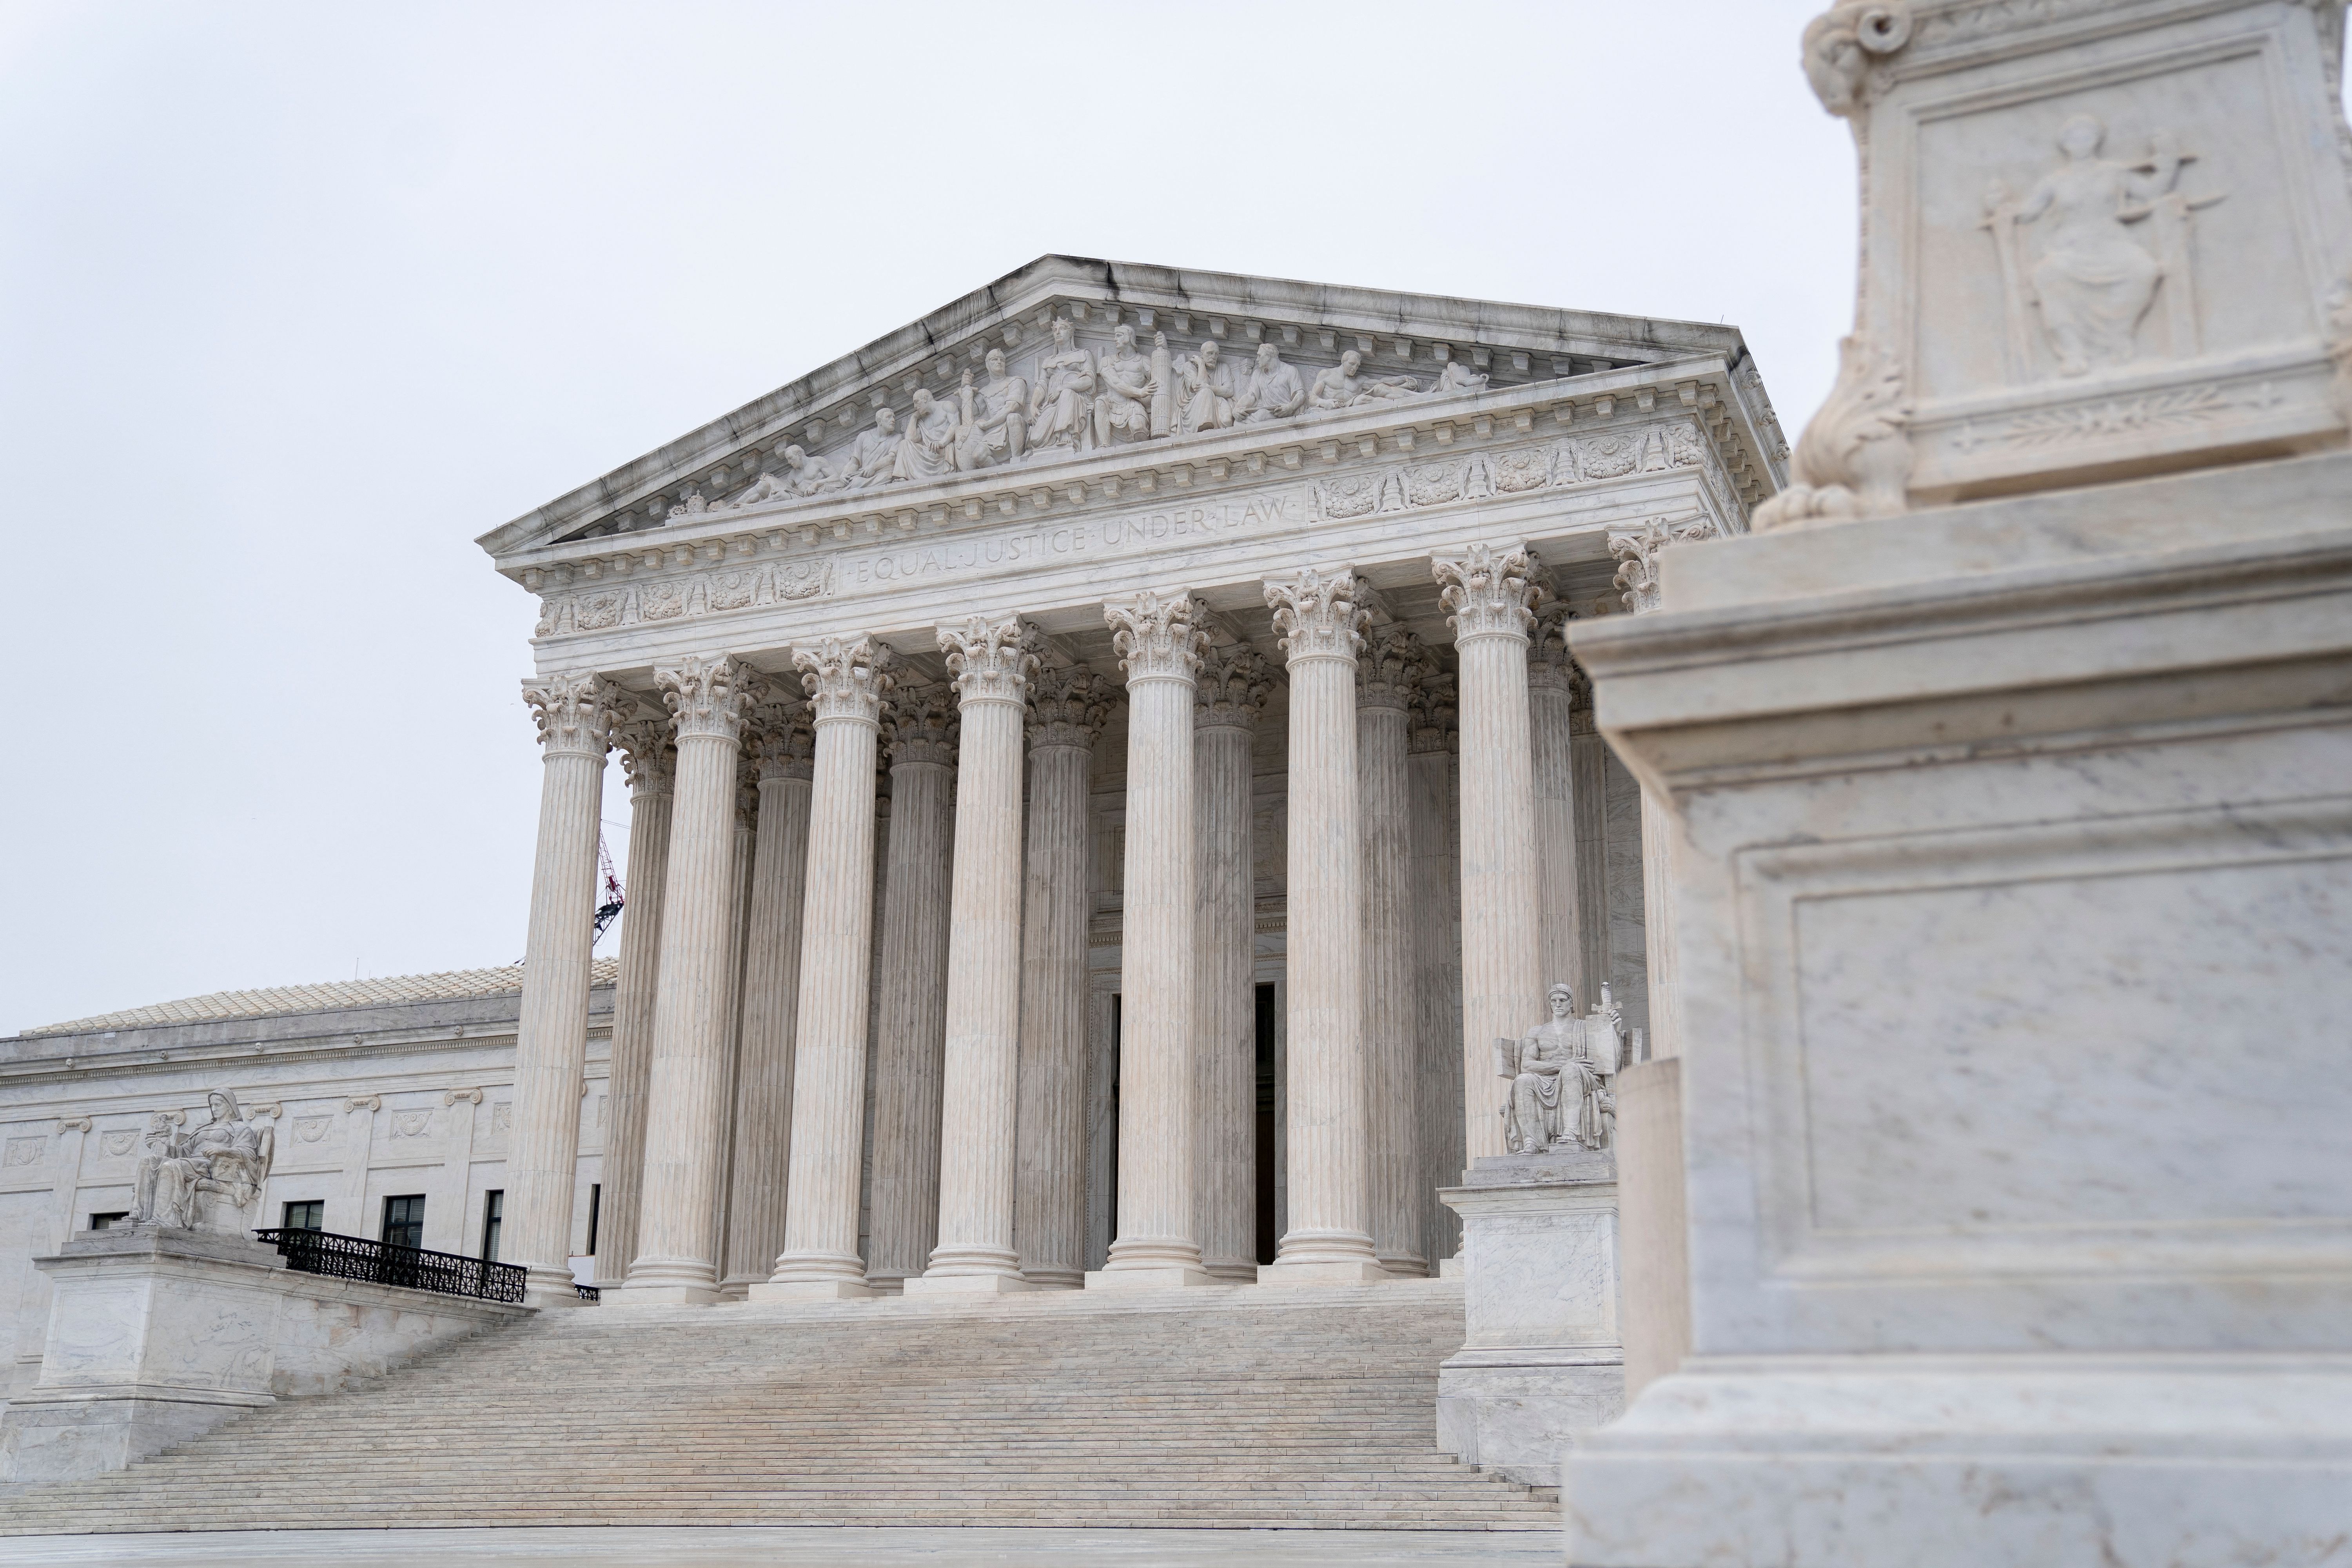 The US Supreme Court in Washington, DC.